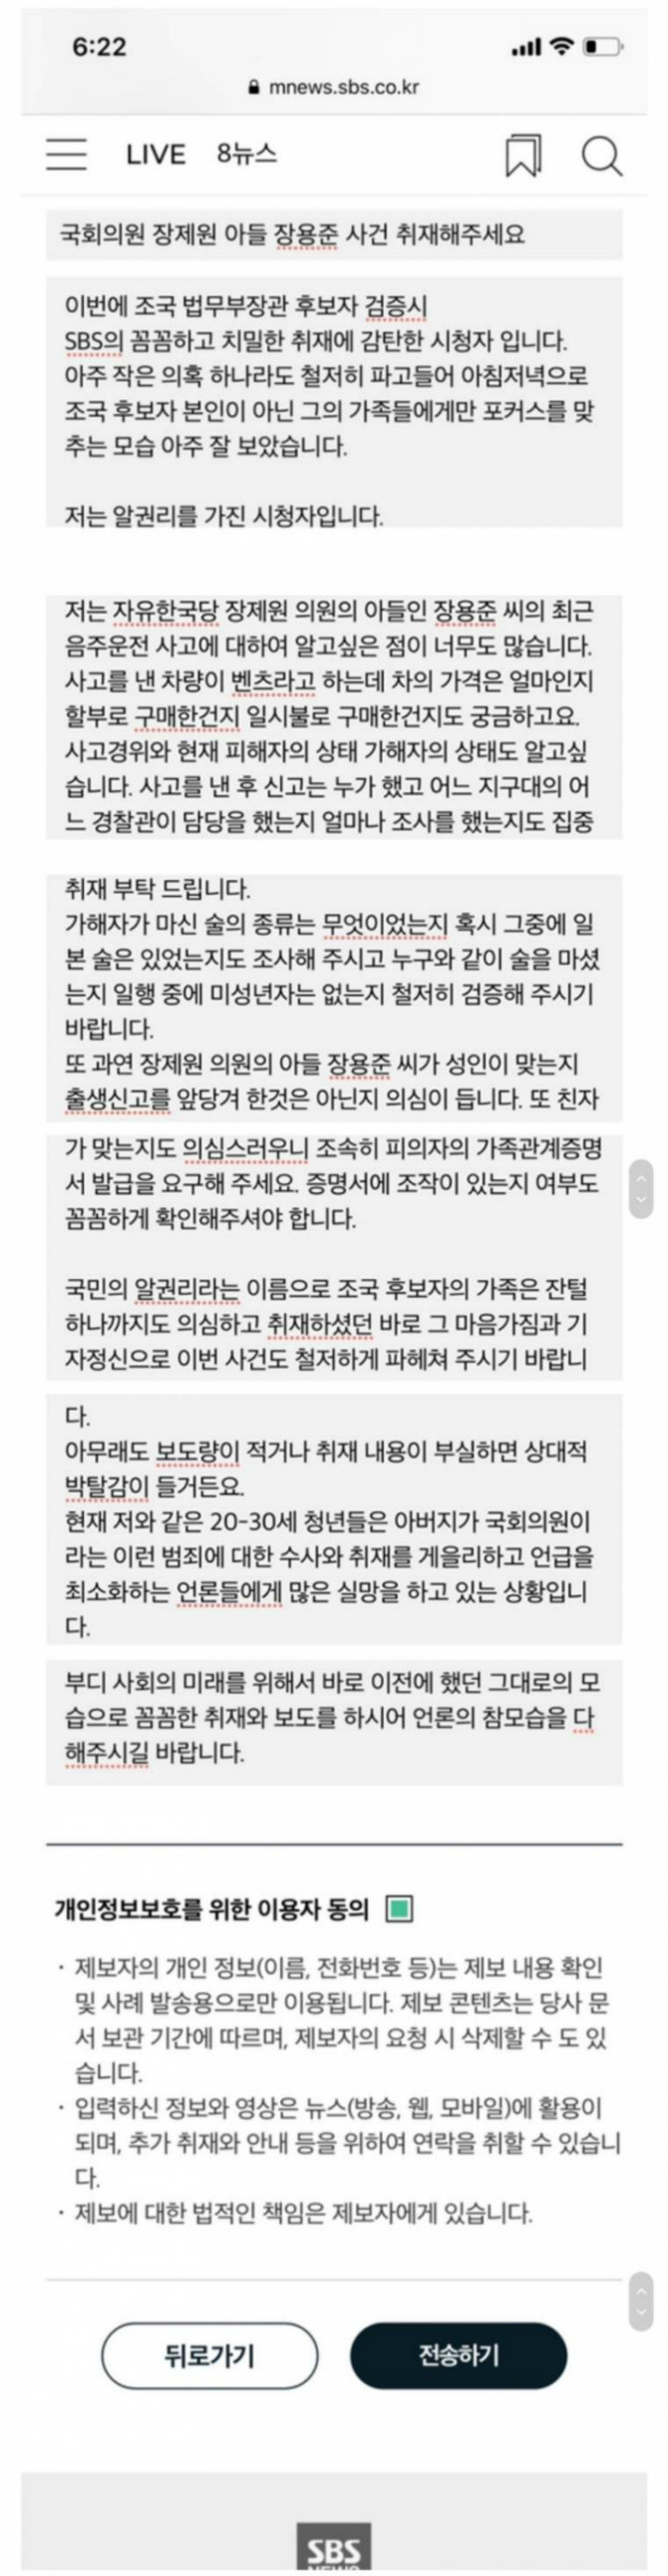 SBS 뉴스에 장제원 아들 제보한 네티즌